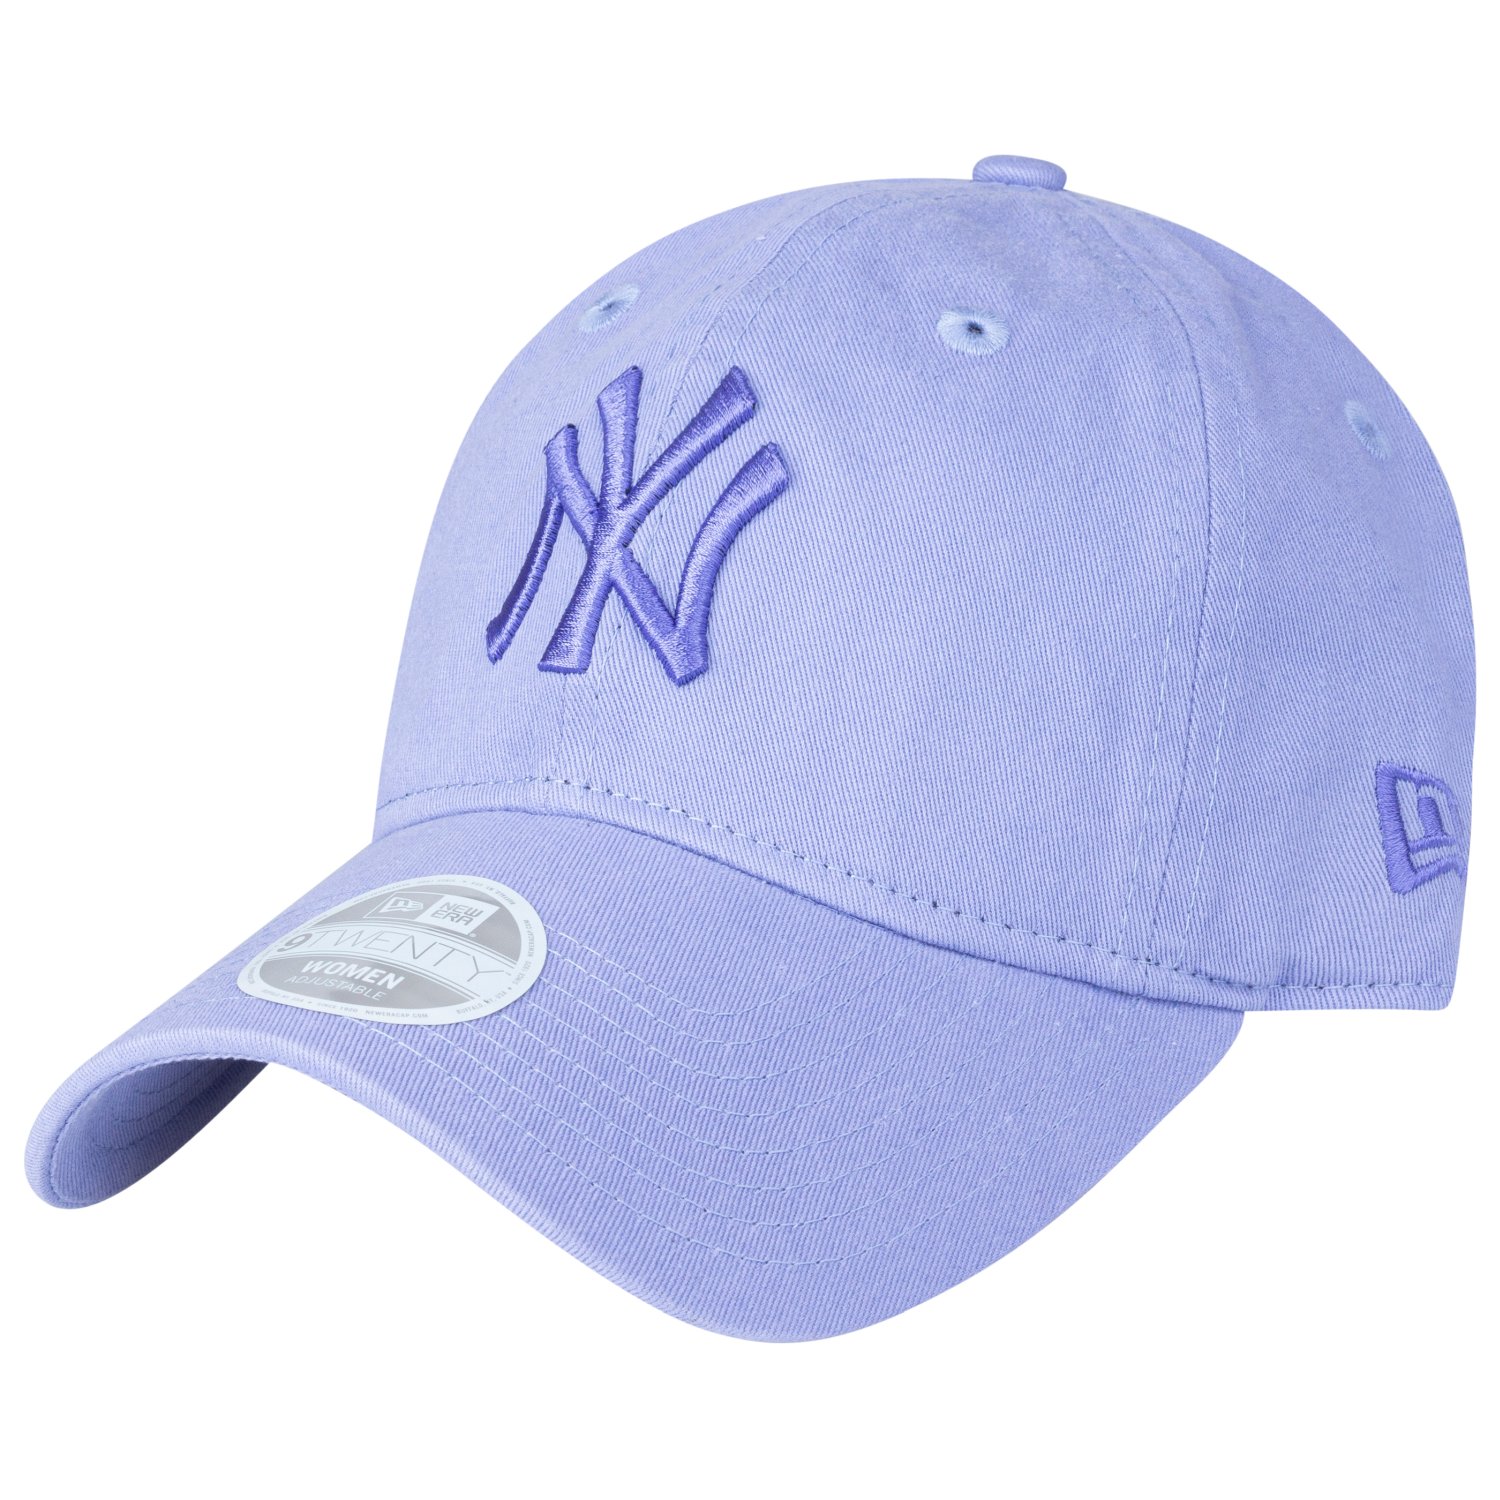 Fanatics Branded Toronto Arenas Blue Unstructured - Adjustable Hat